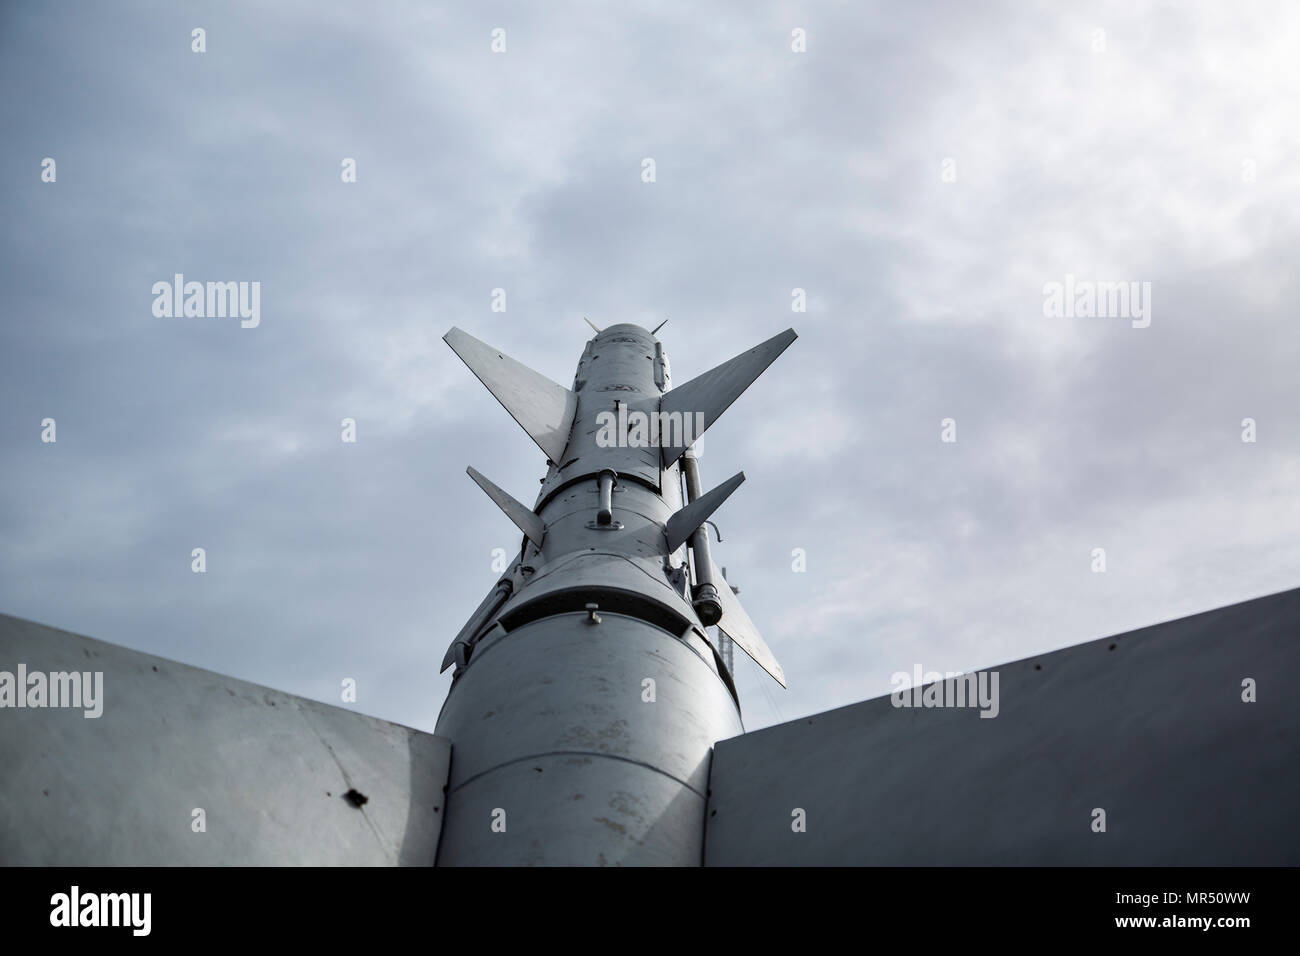 Old rocket missile on sky background Duotone Stock Photo